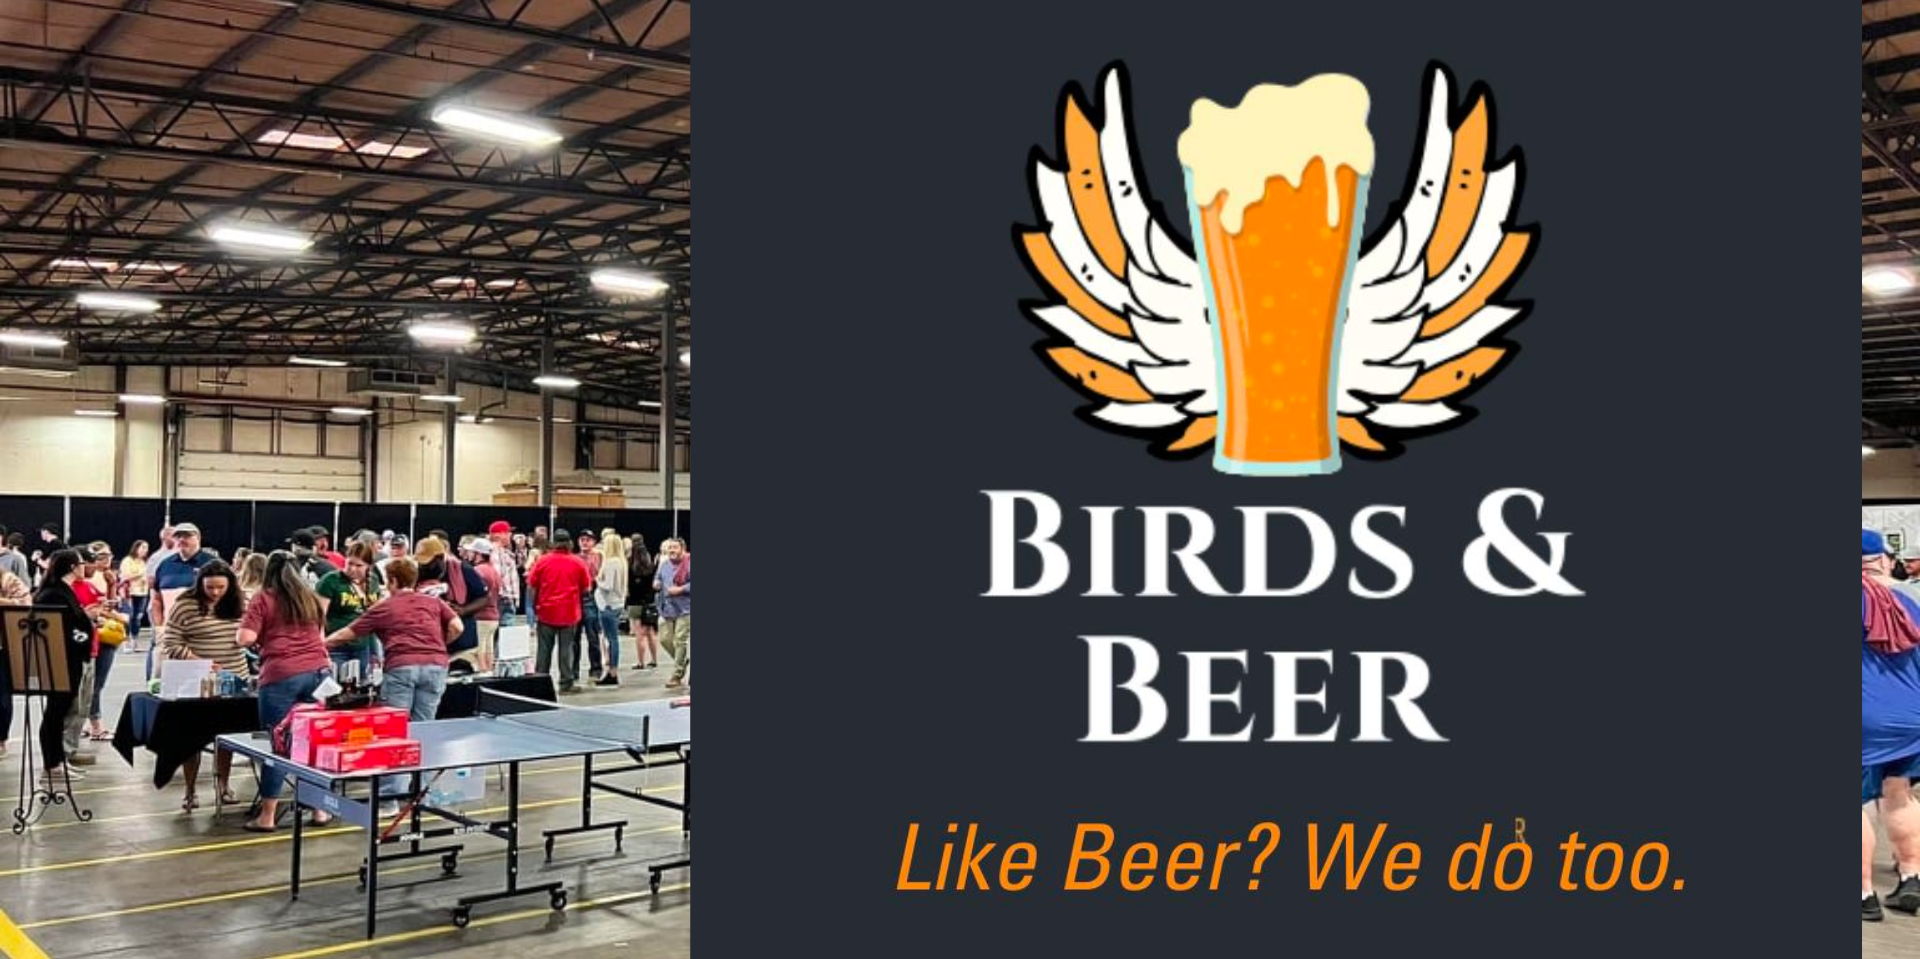 Birds & Beer promotional image